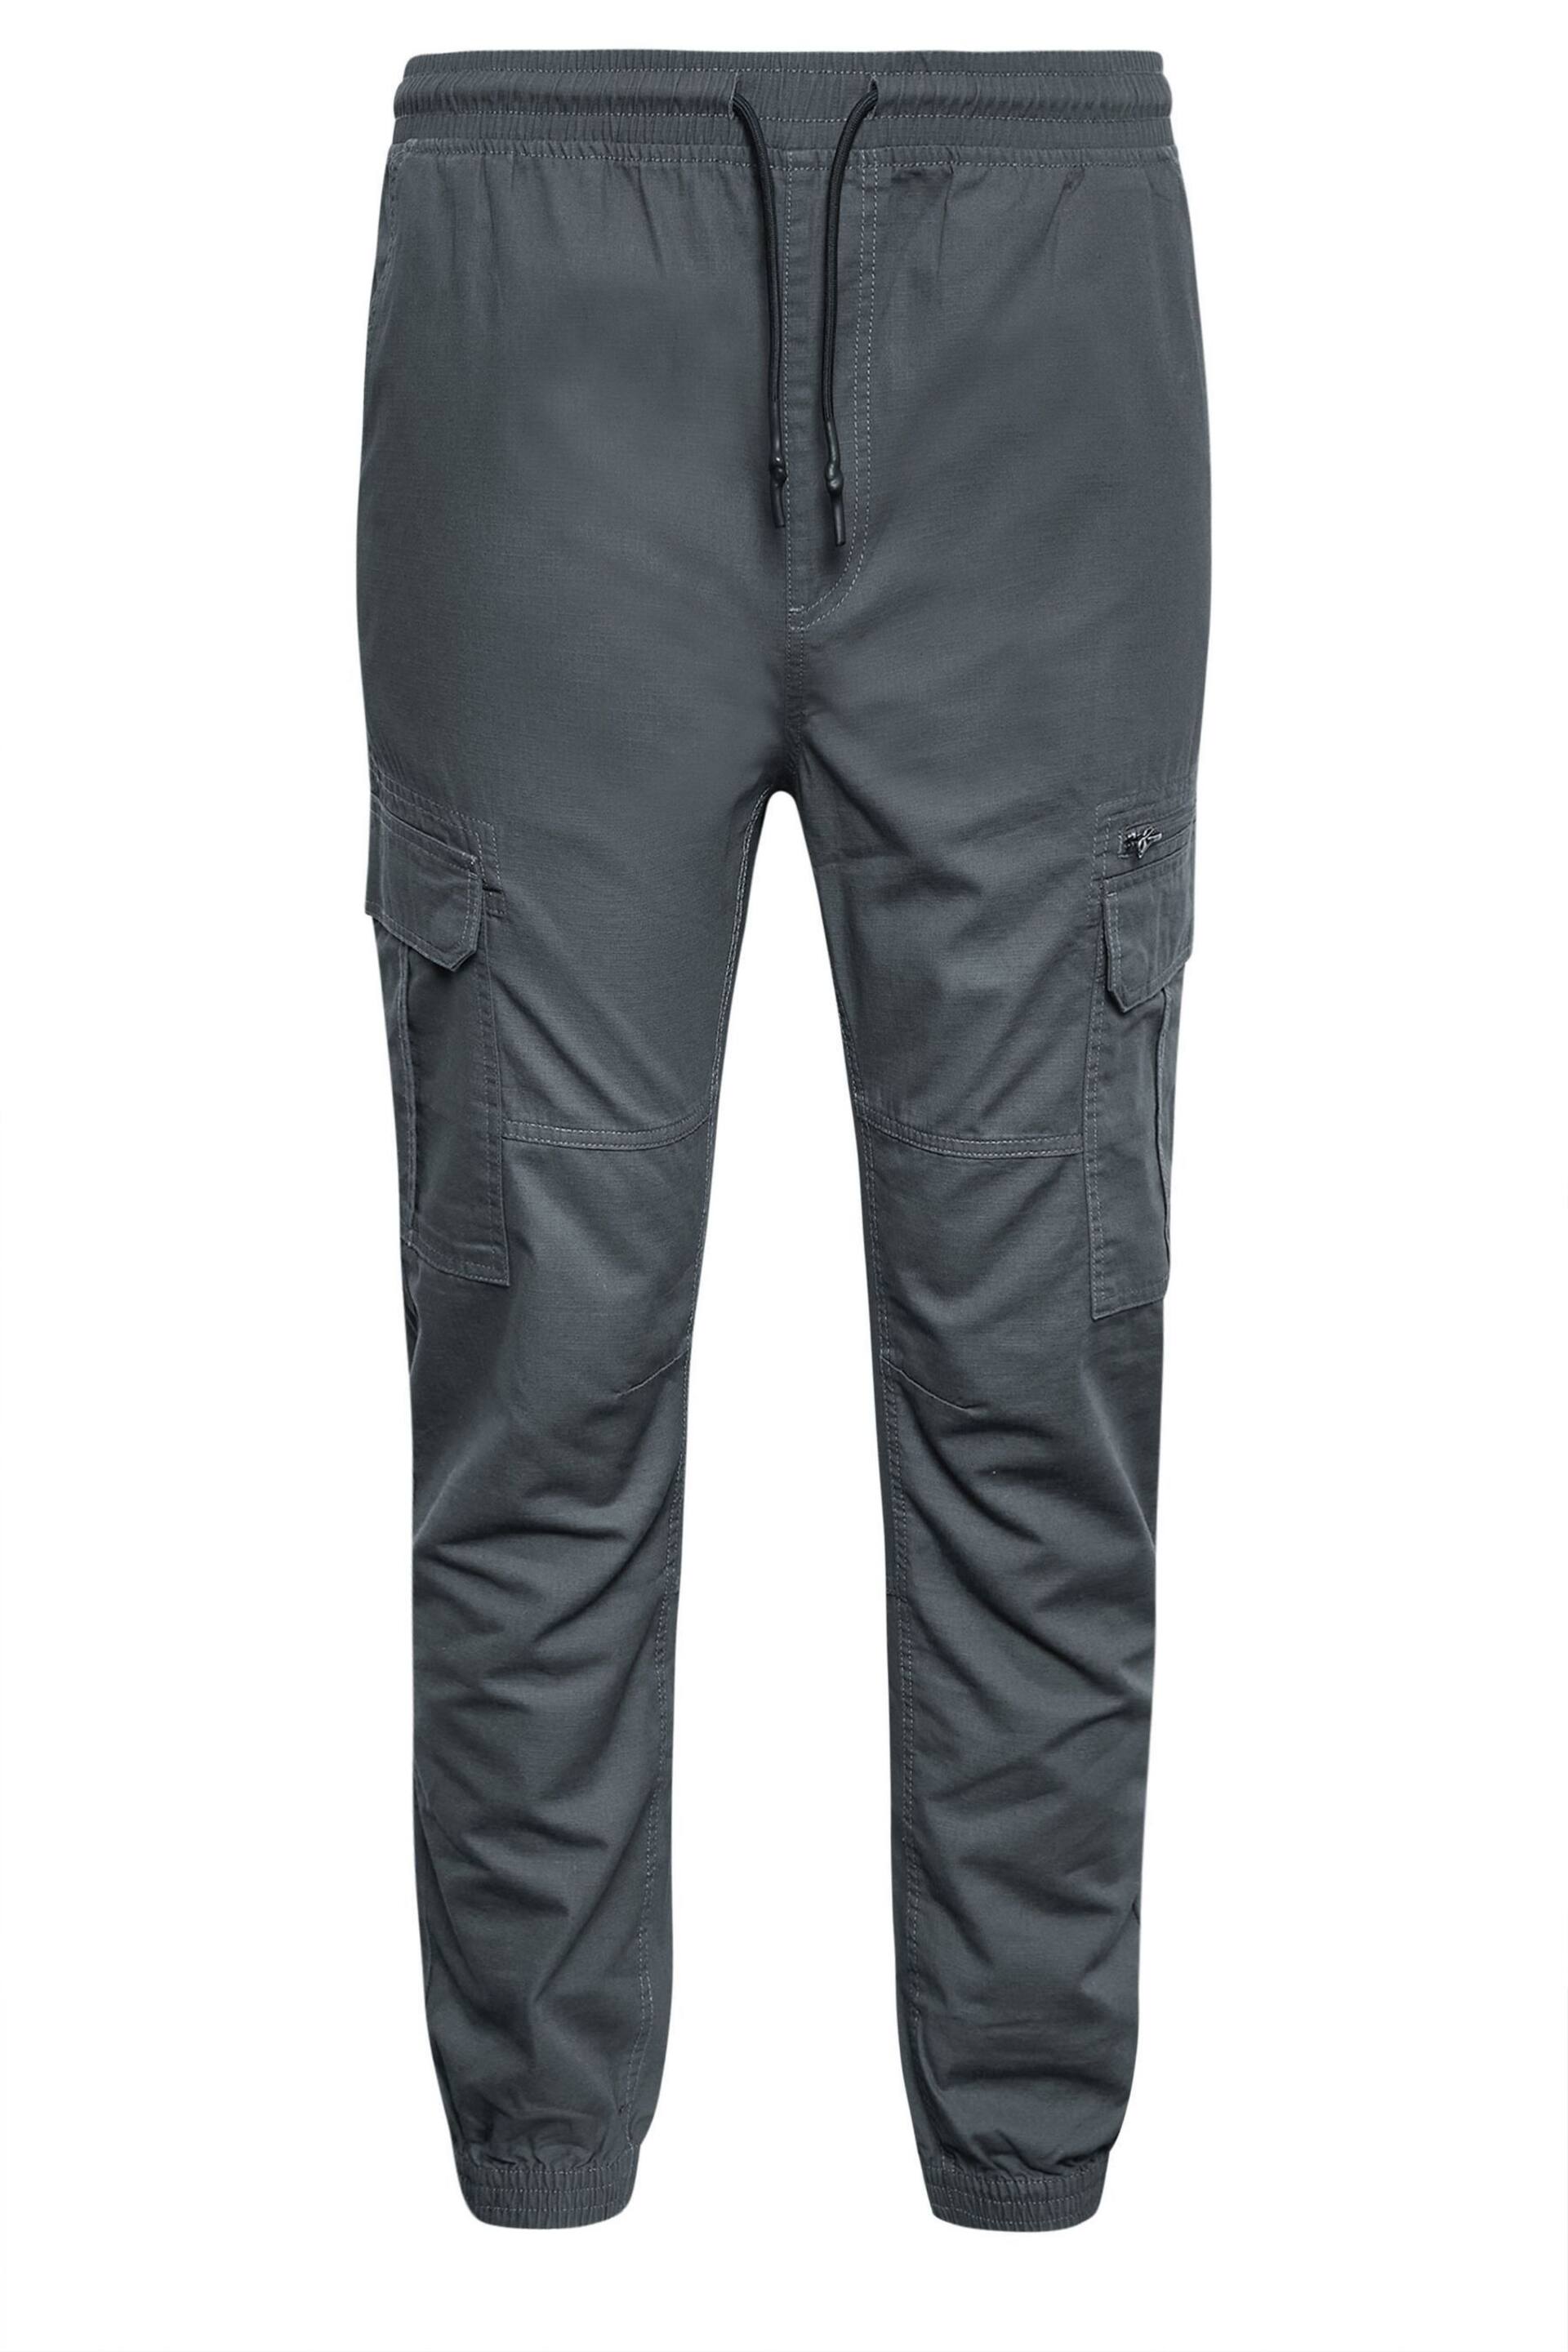 BadRhino Big & Tall Grey Ripstop Cargo Trousers - Image 2 of 3